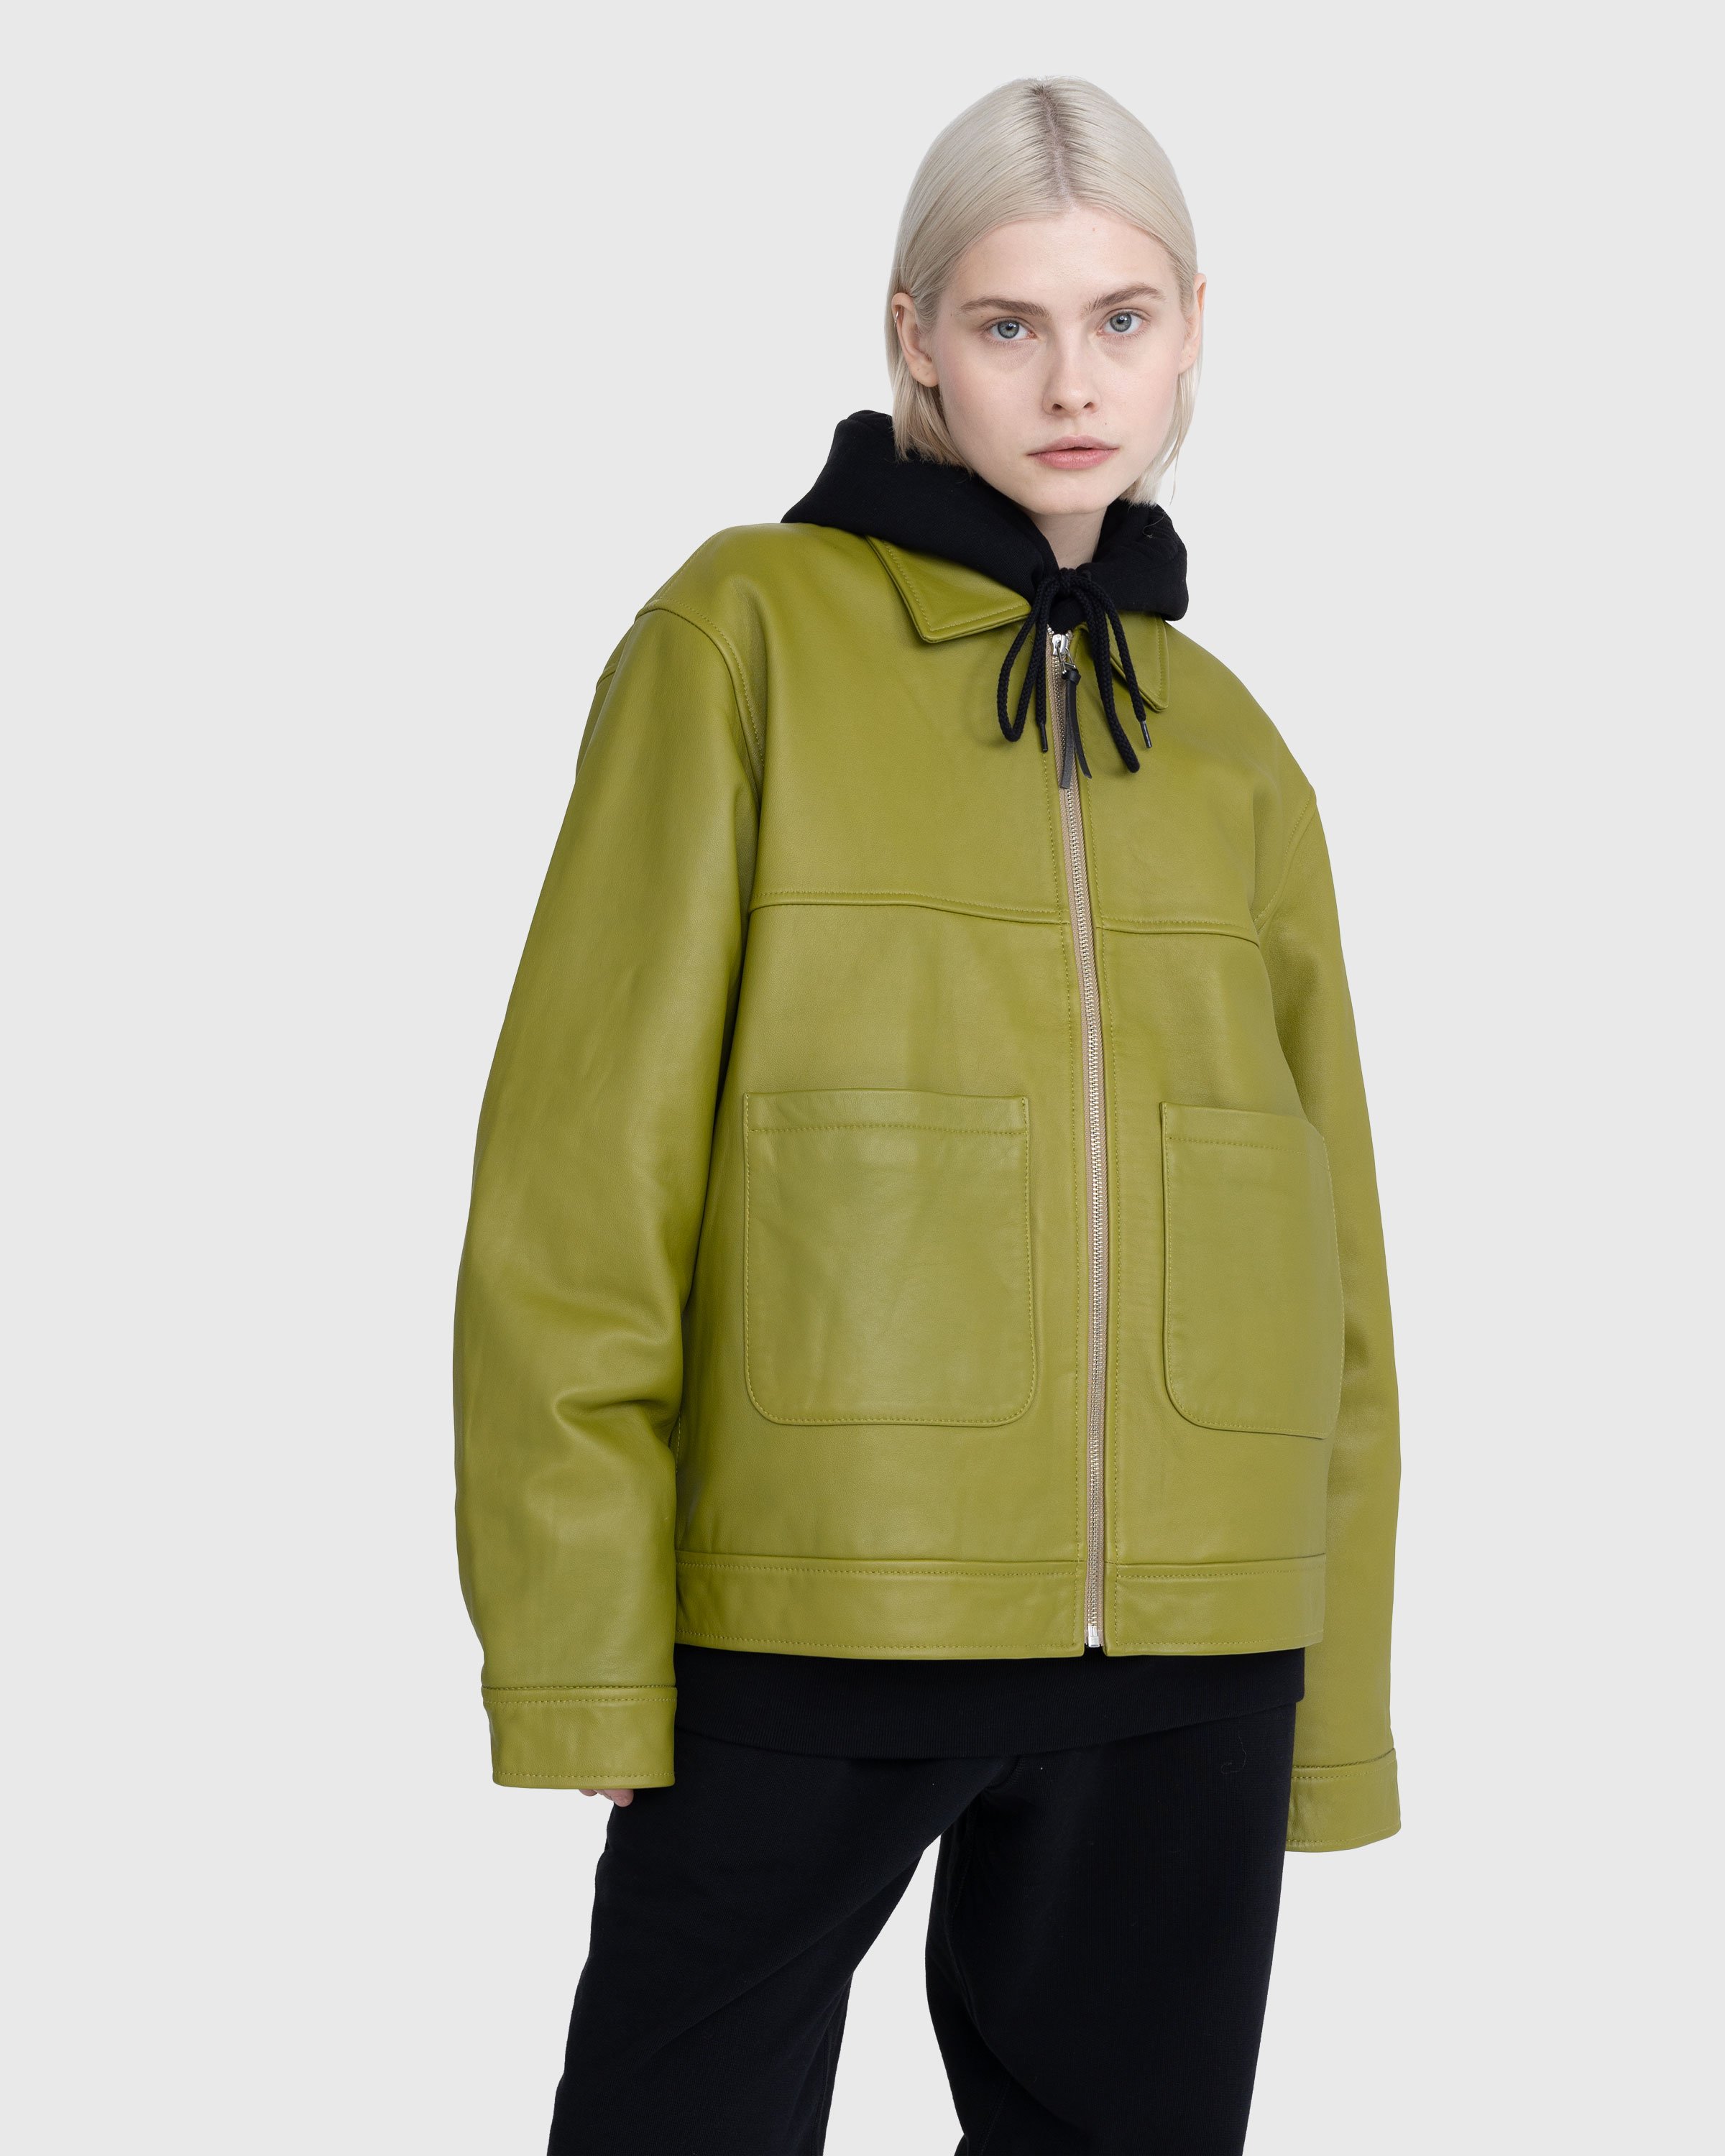 Highsnobiety - Leather Jacket Olive Green - Clothing - Green - Image 11